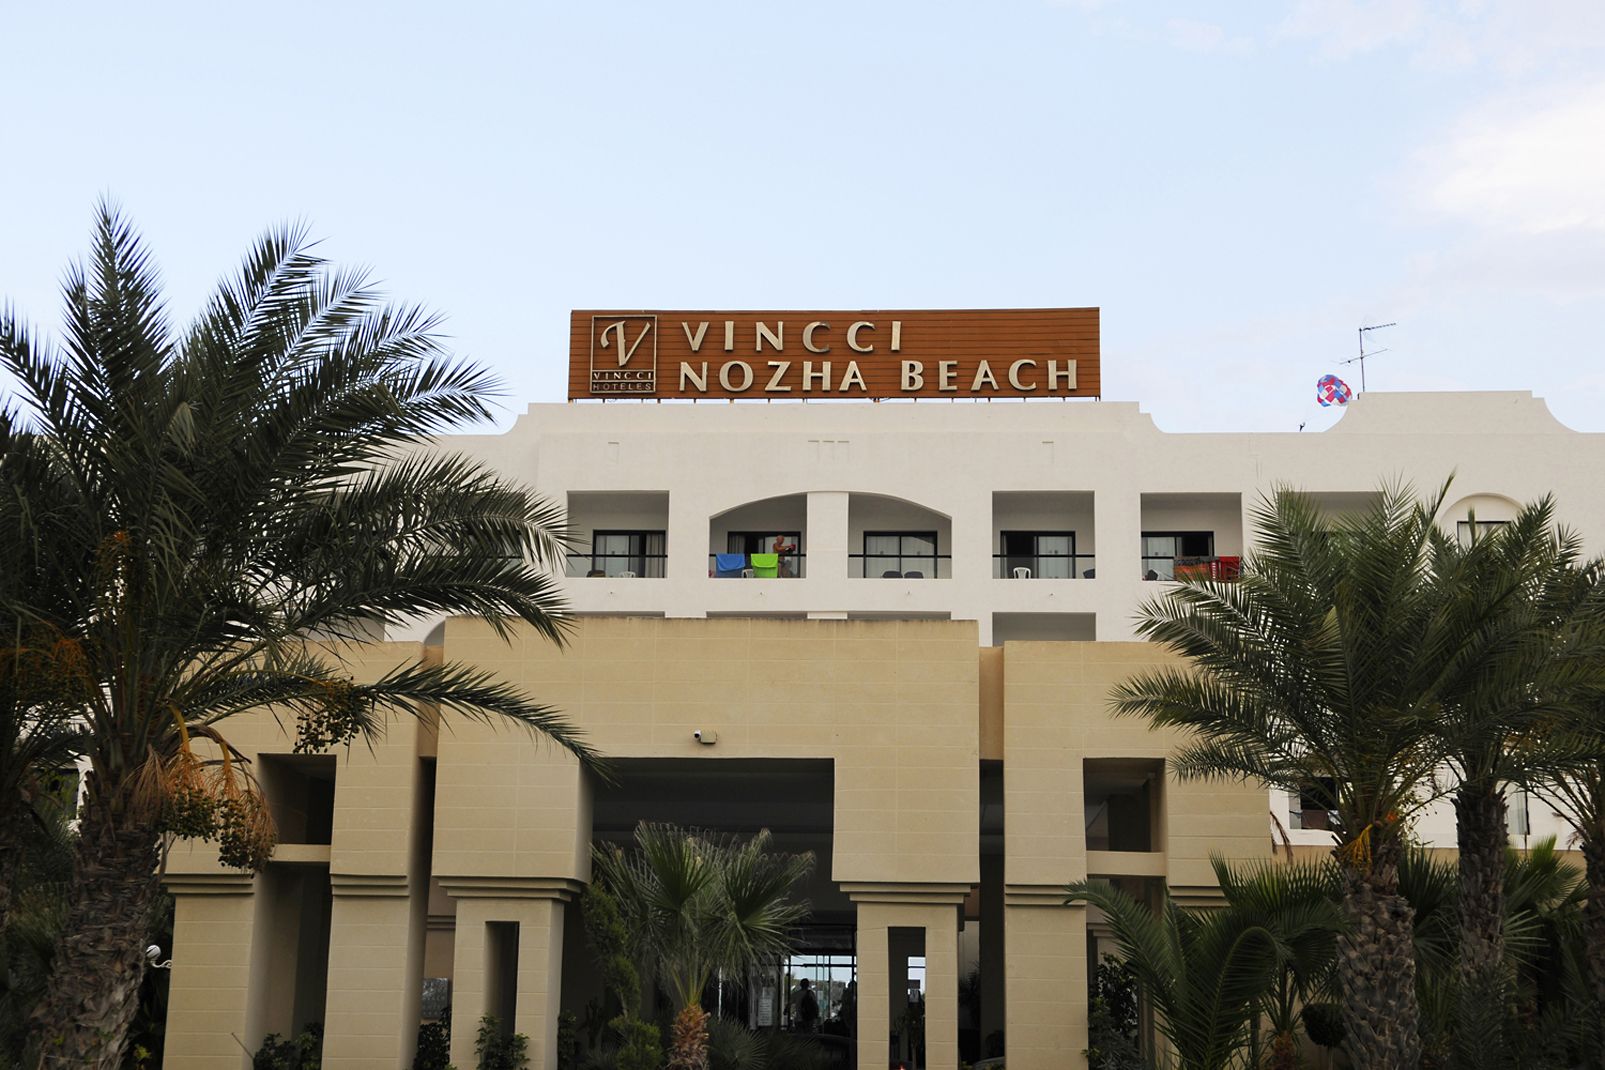 Vincci Nozha Beach